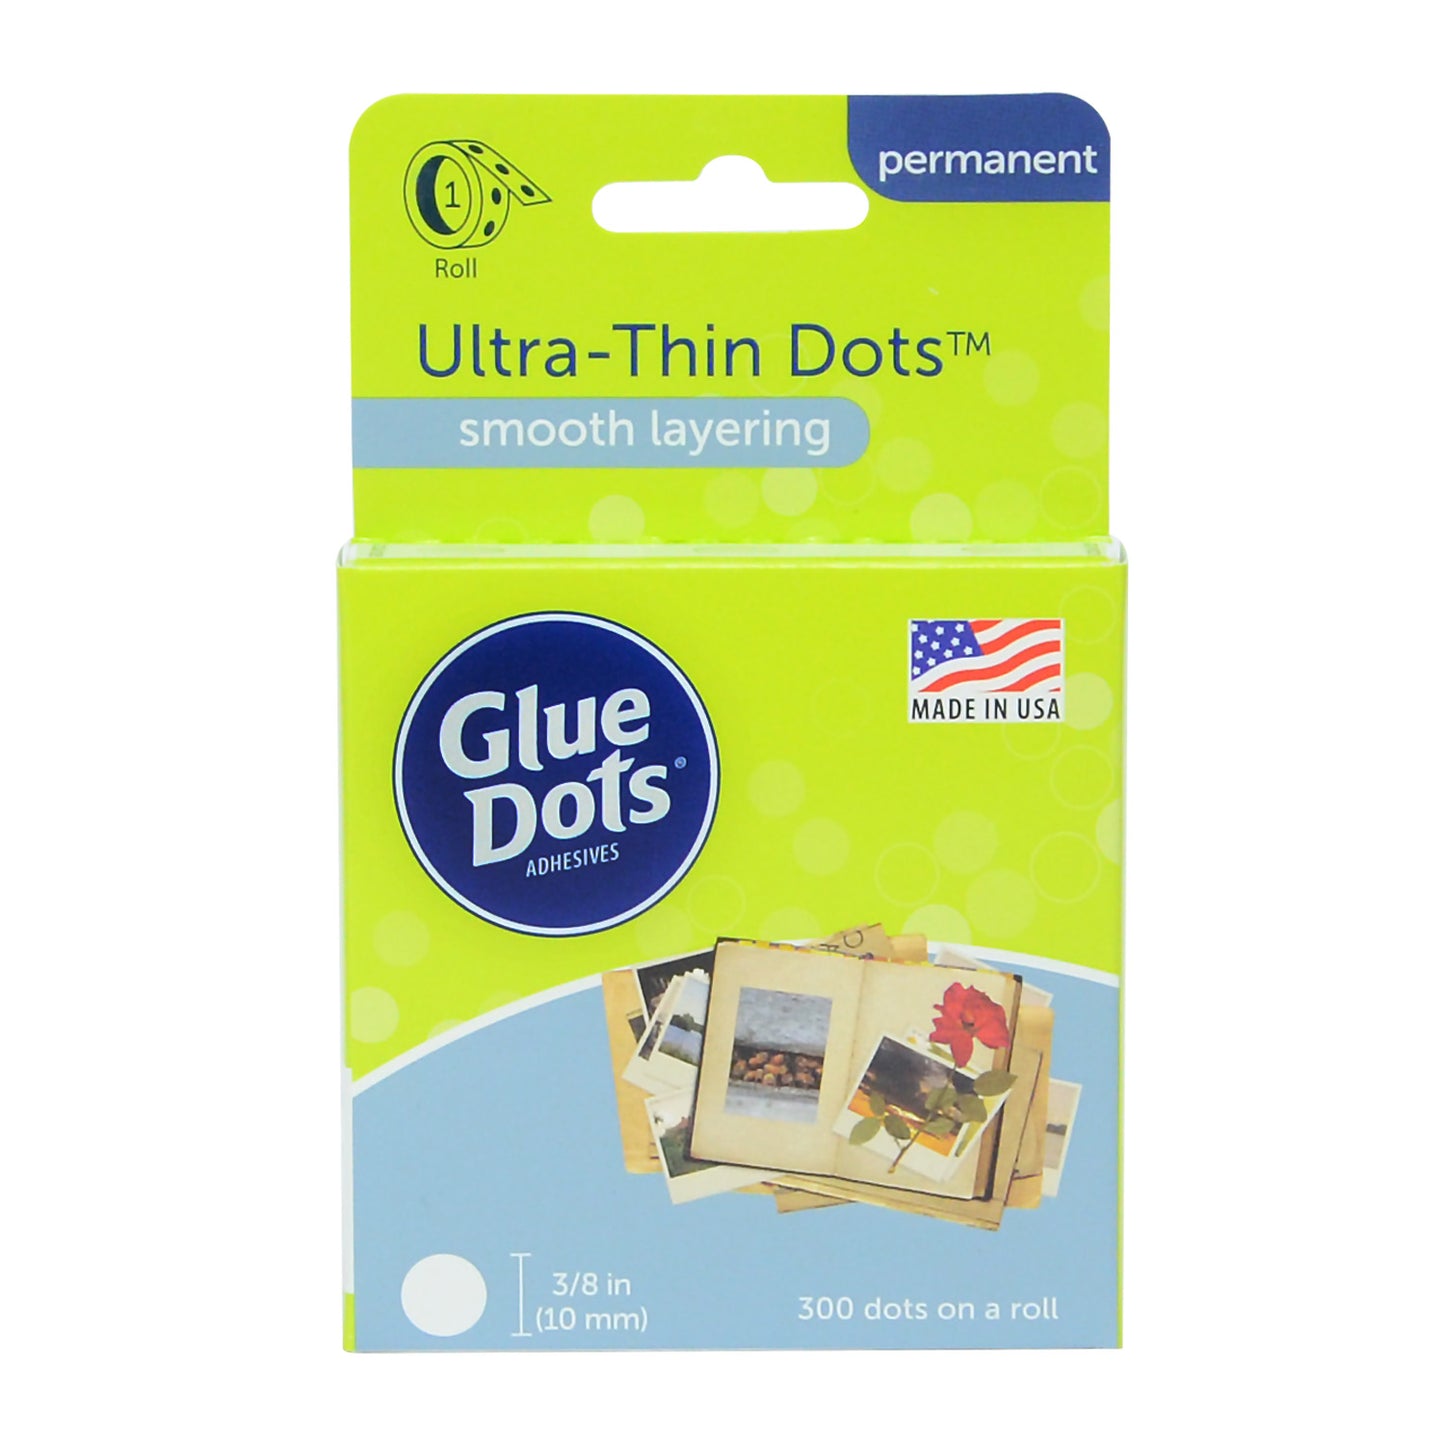 Ultra-Thin Dots by Glue Dots